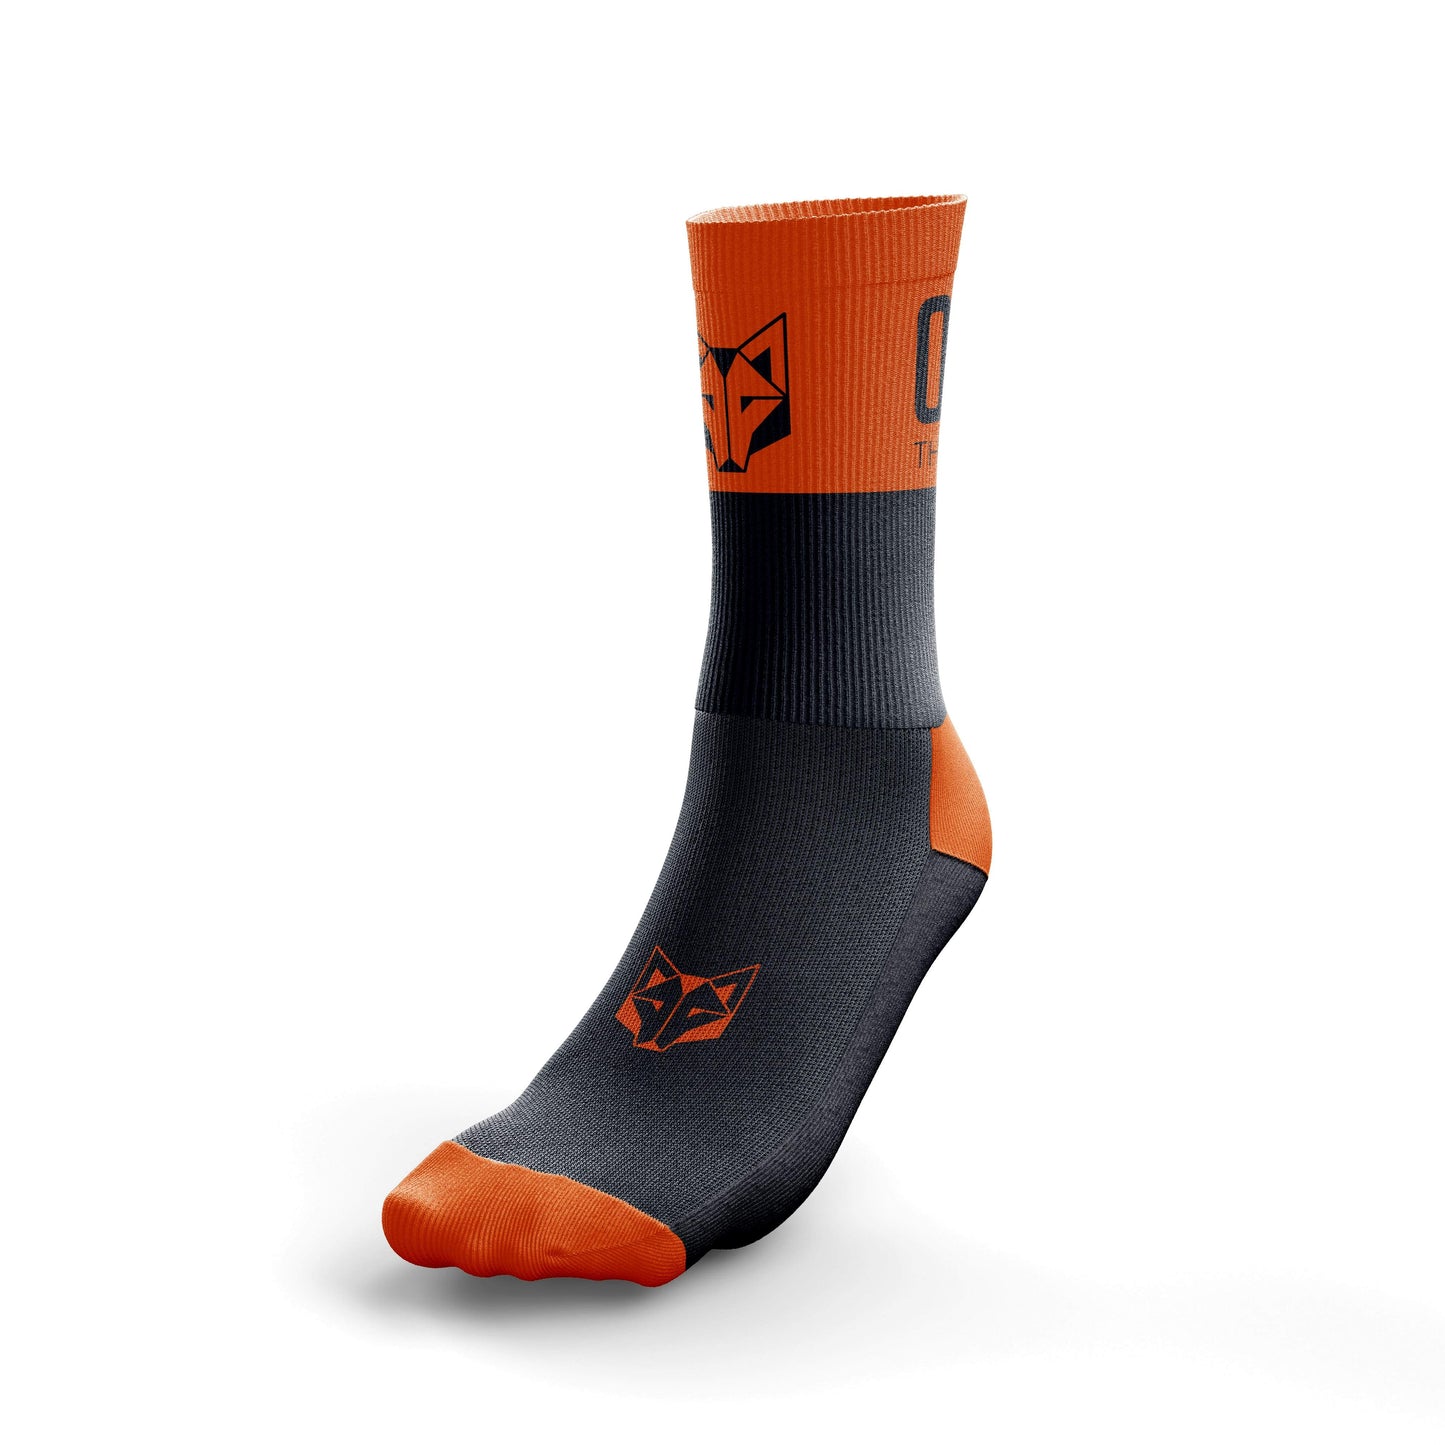 Calcetines de media altura de la marca Otso de color naranja y negro. Foto trasera